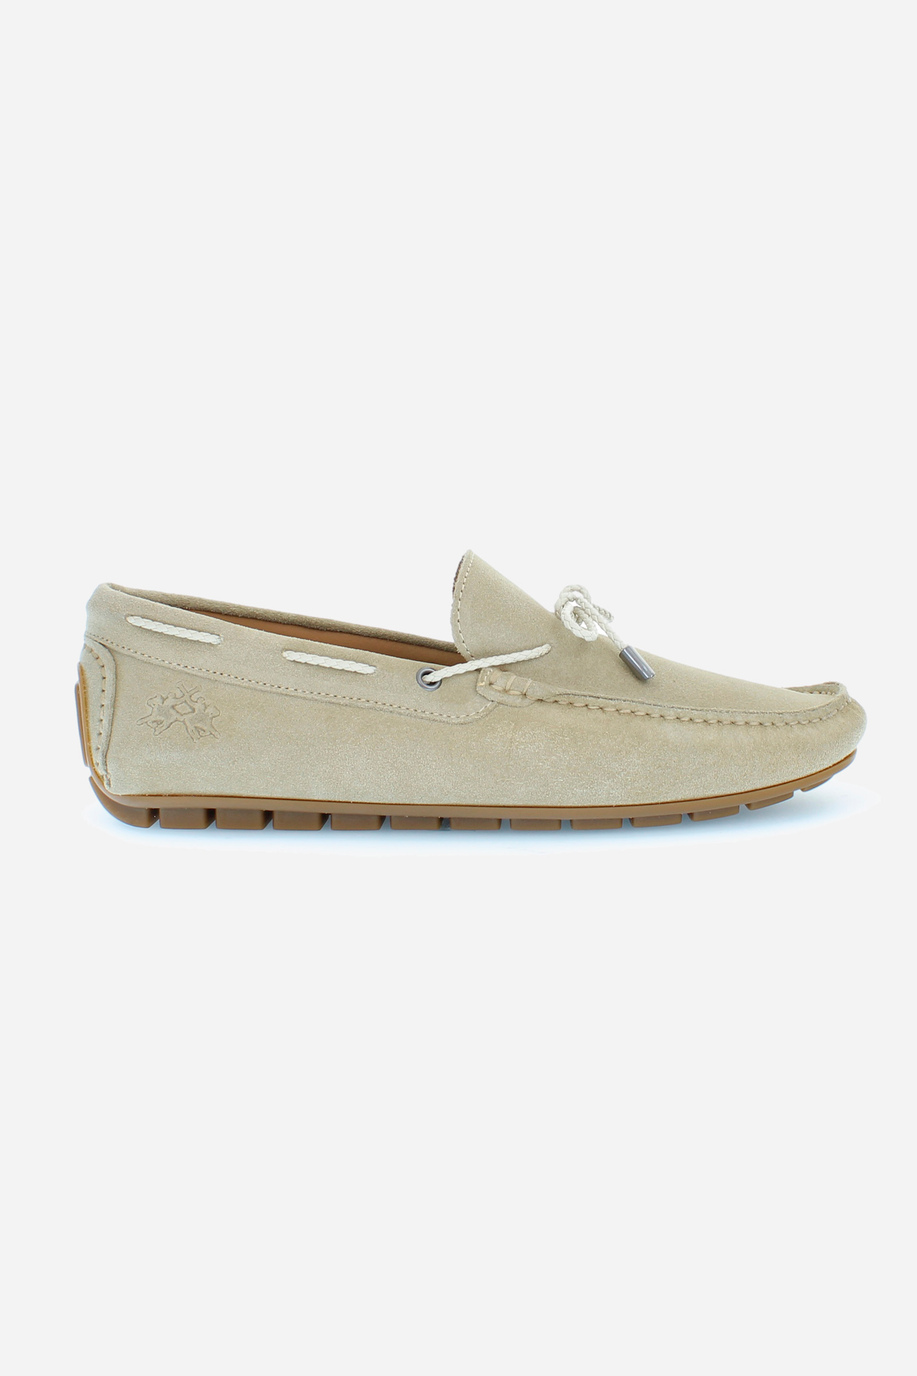 Men's suede loafers with laces - Formal Shoes | La Martina - Official Online Shop